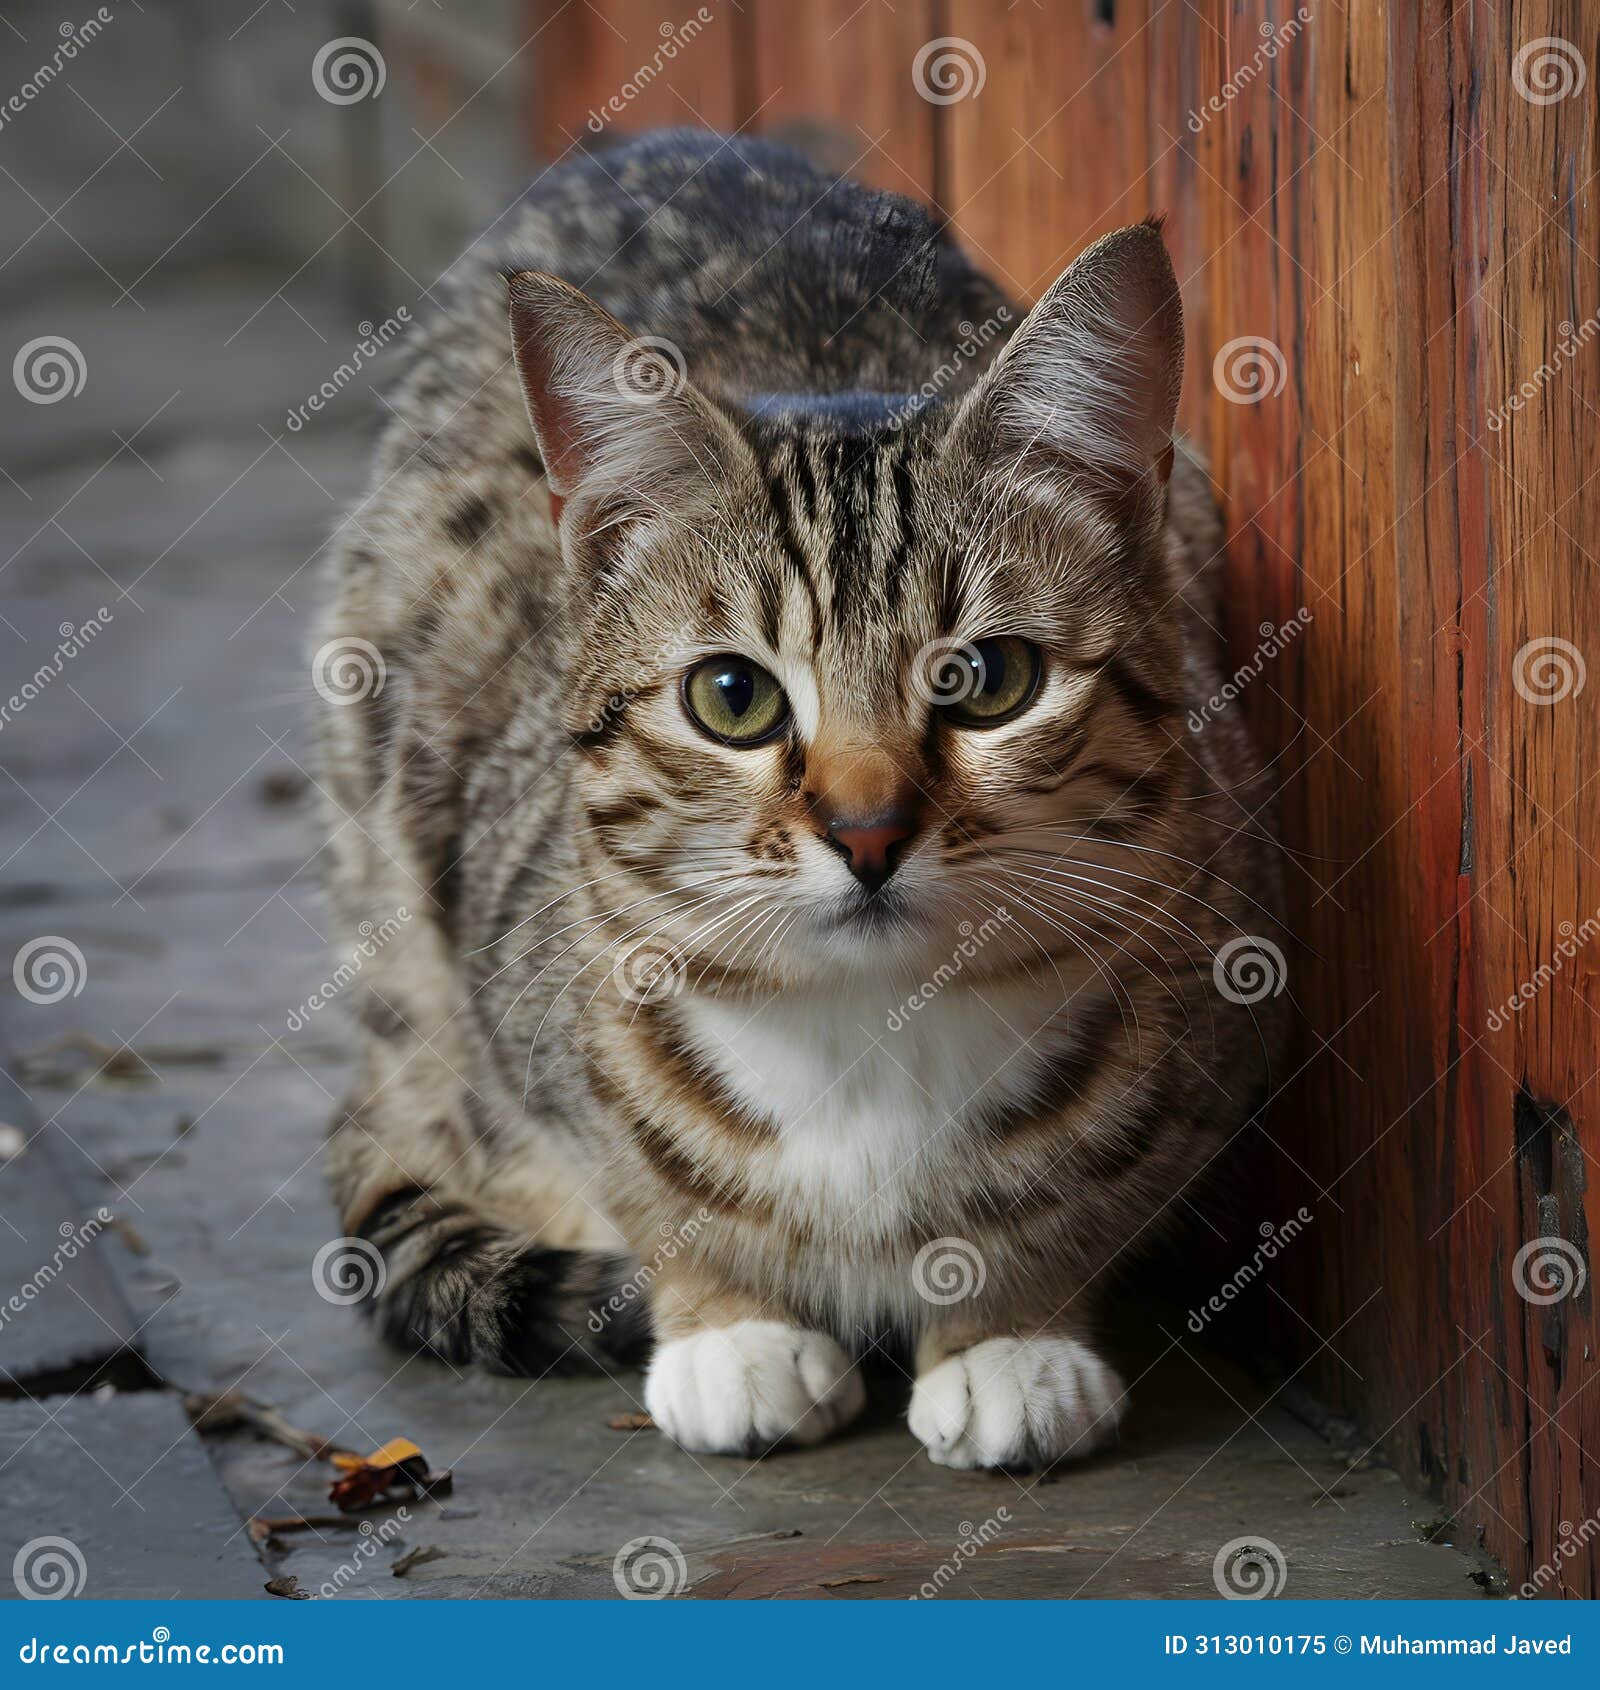 stray cats poignant gaze reflects hardships faced on the streets